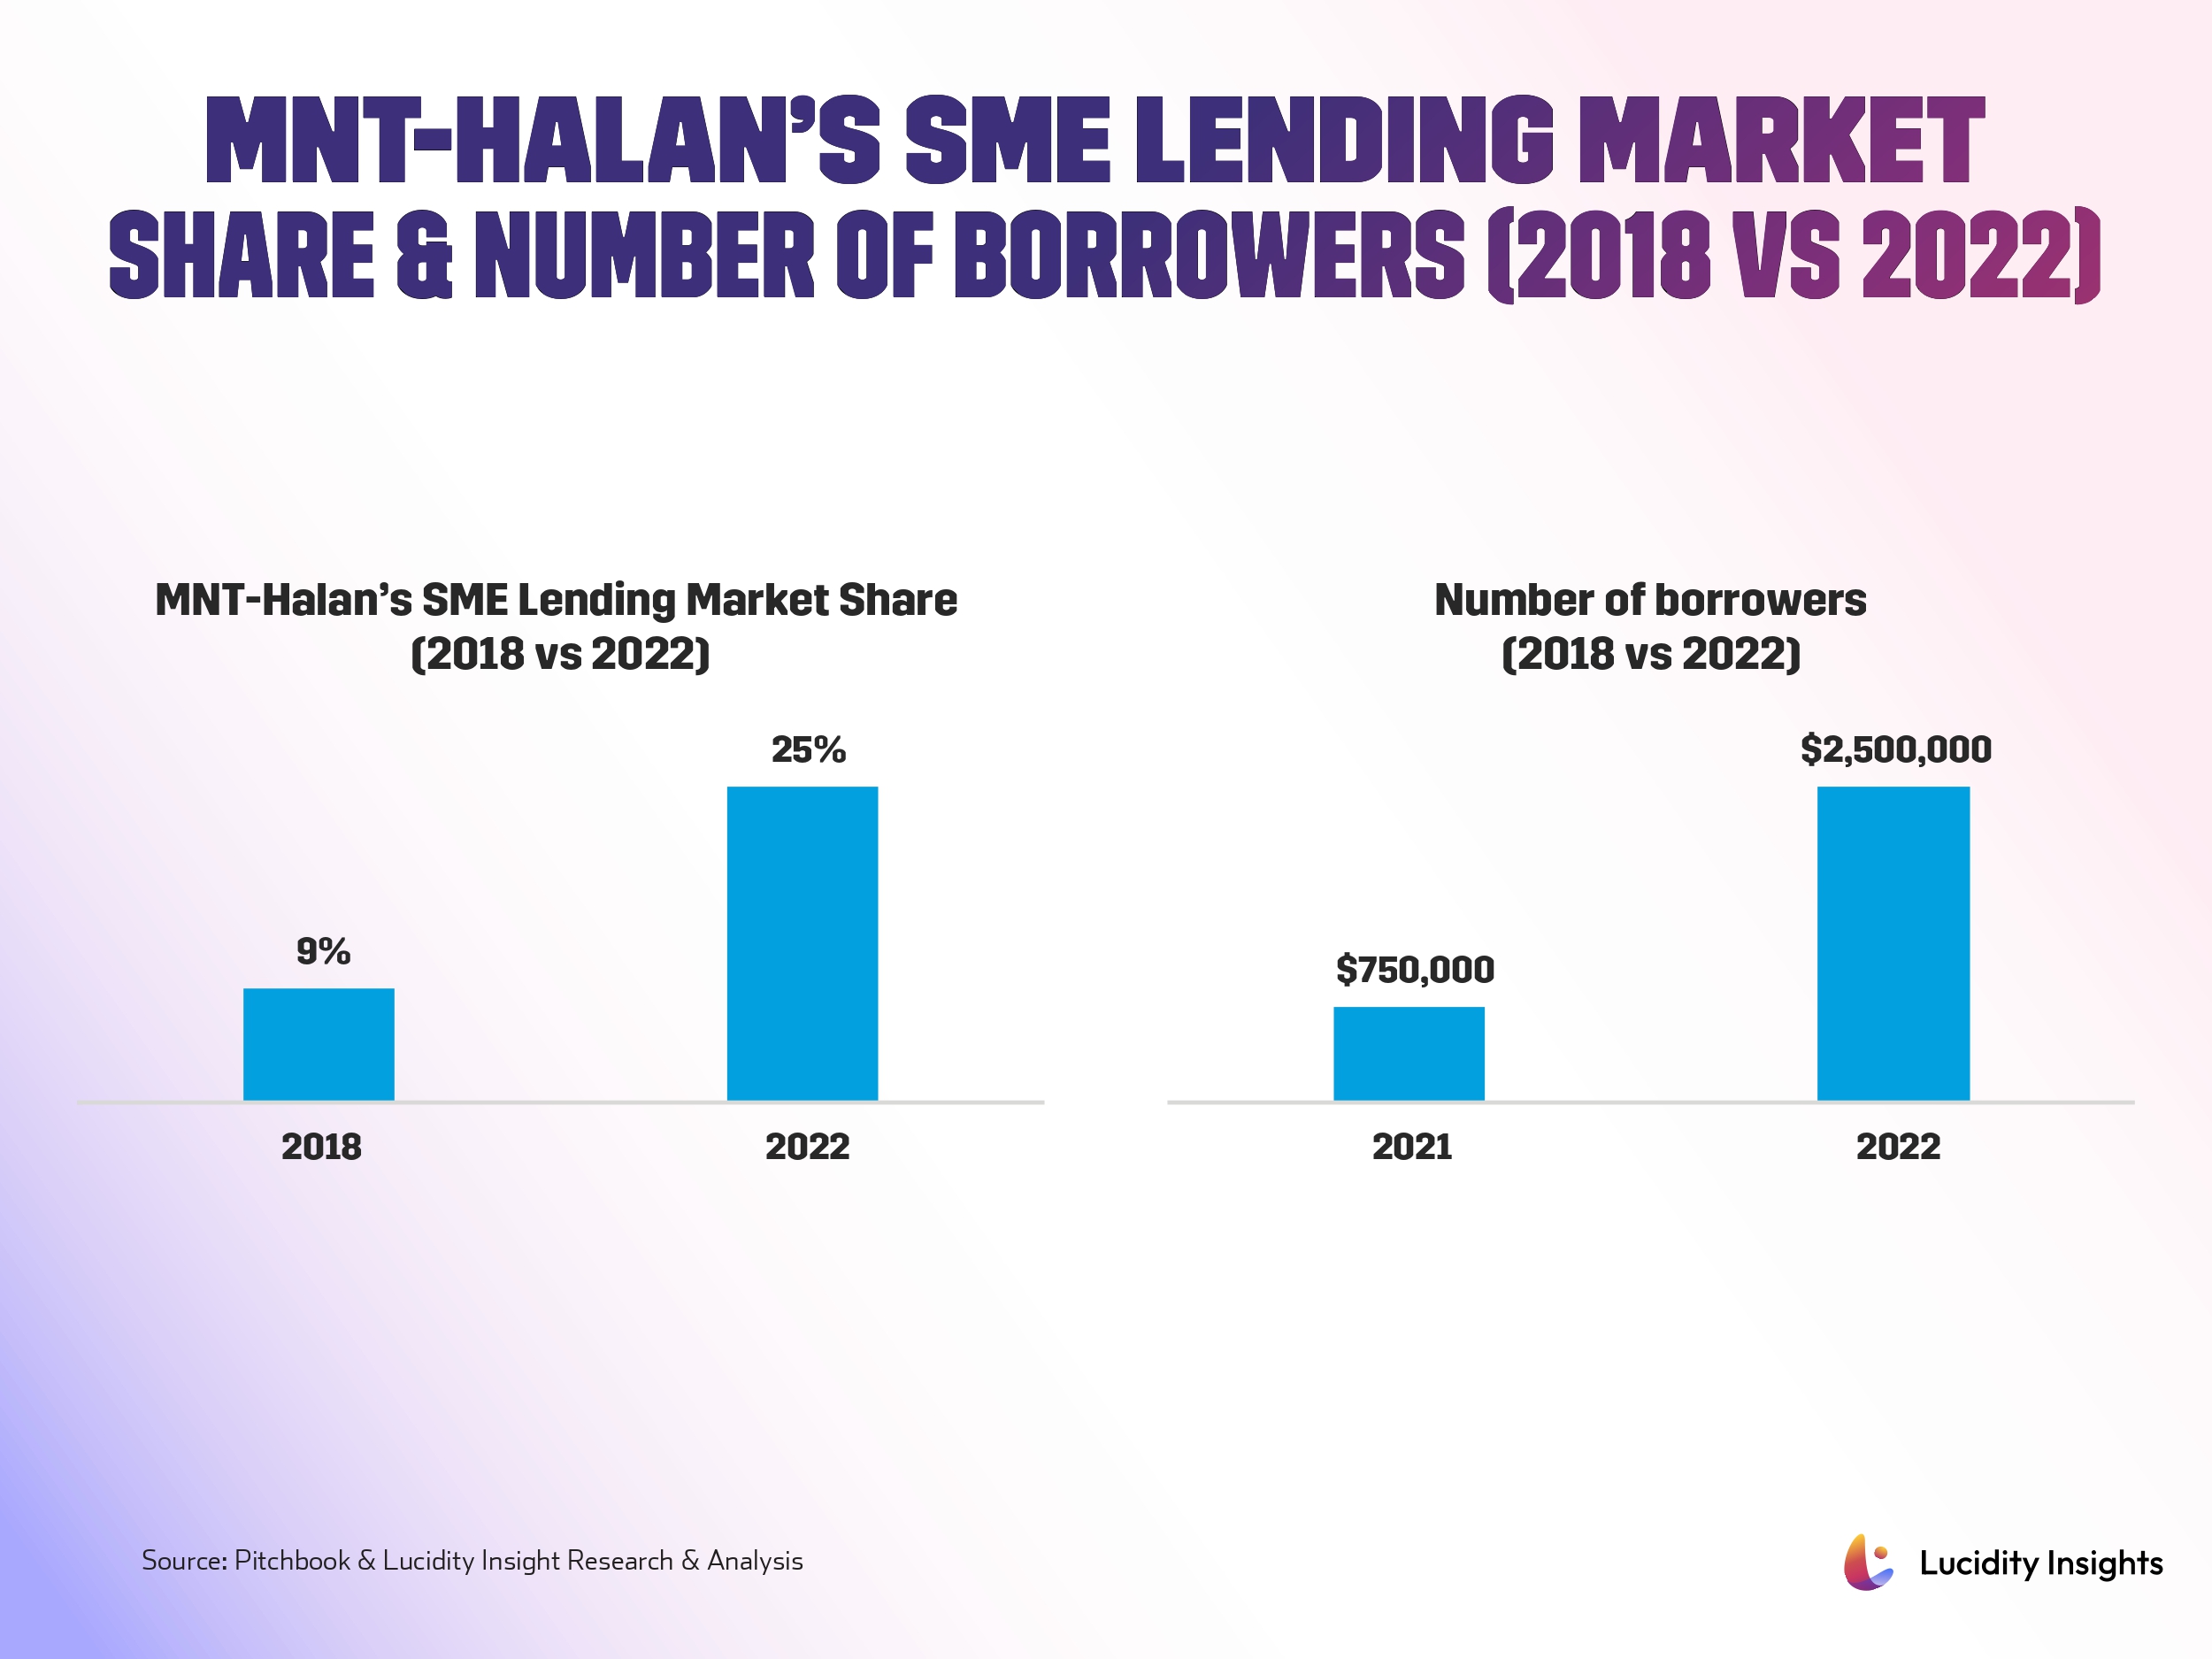 MNT-Halan's SME Lending Market Share & Number of Borrowers (2018 vs 2022)